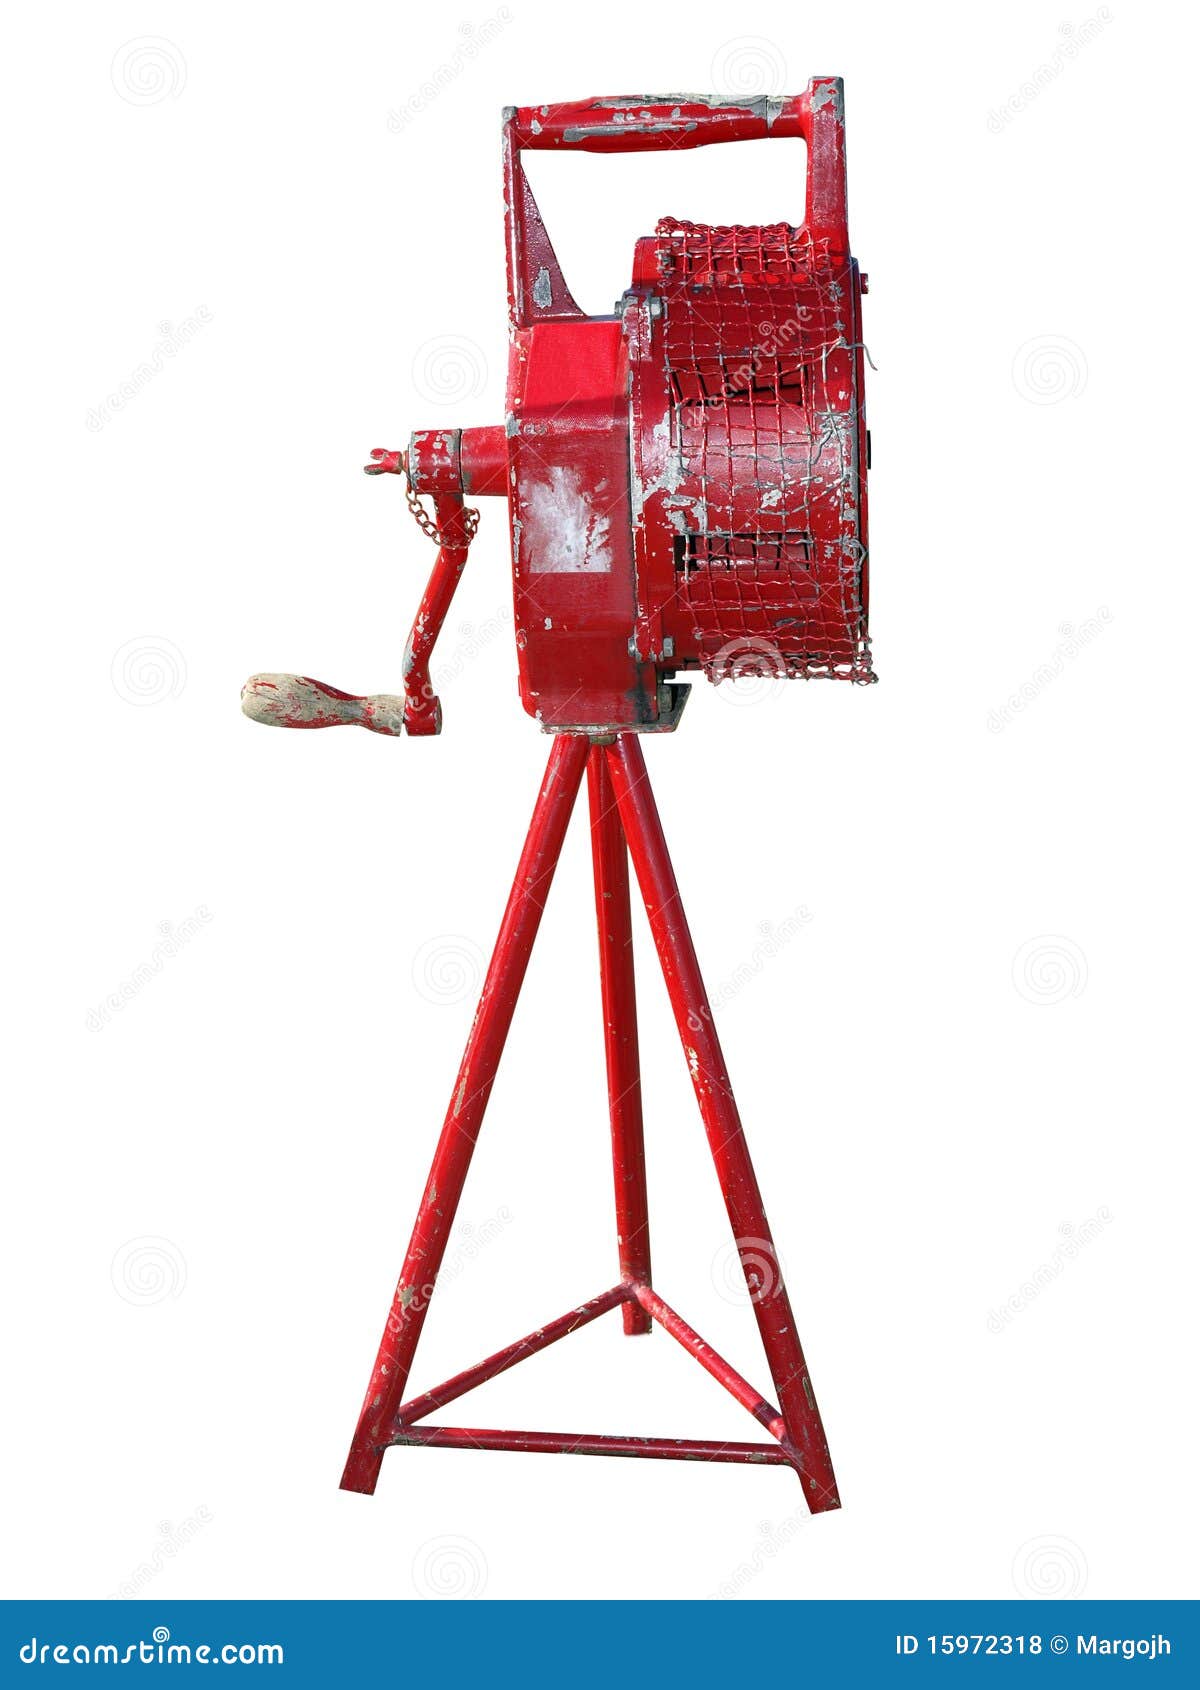 antique manual fire siren